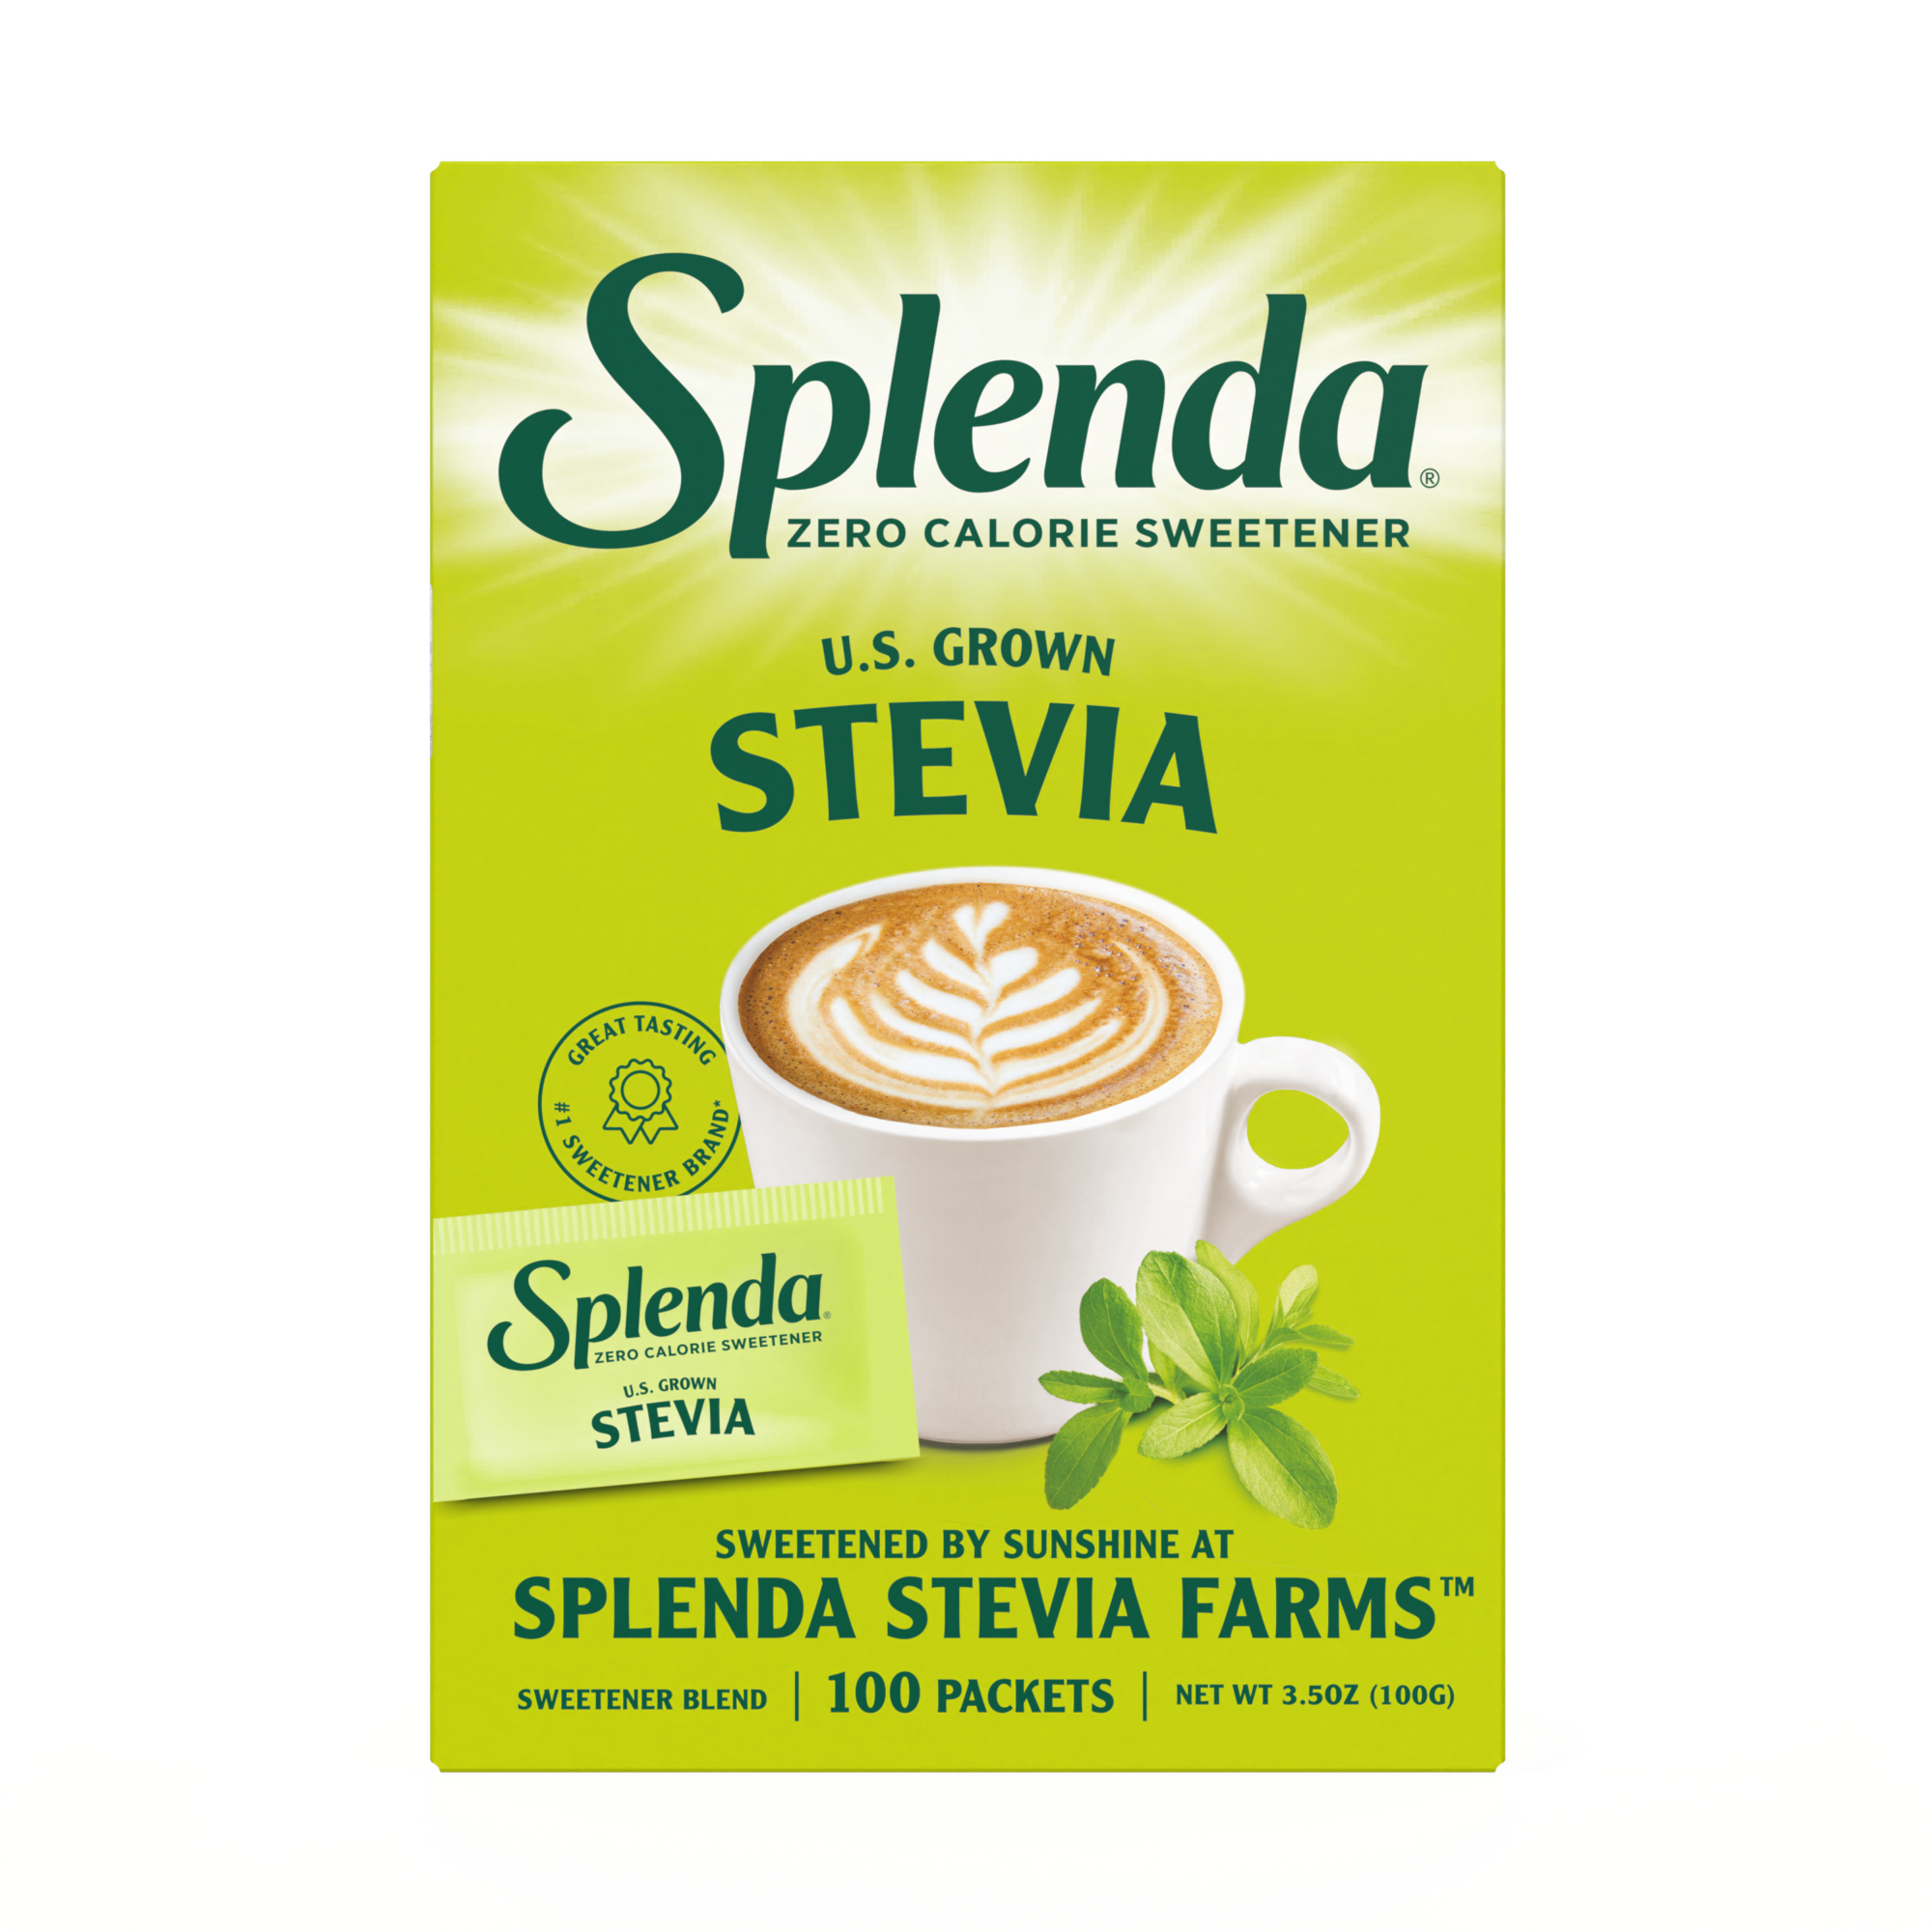 Splenda U.S. Grown Stevia Packets - Front